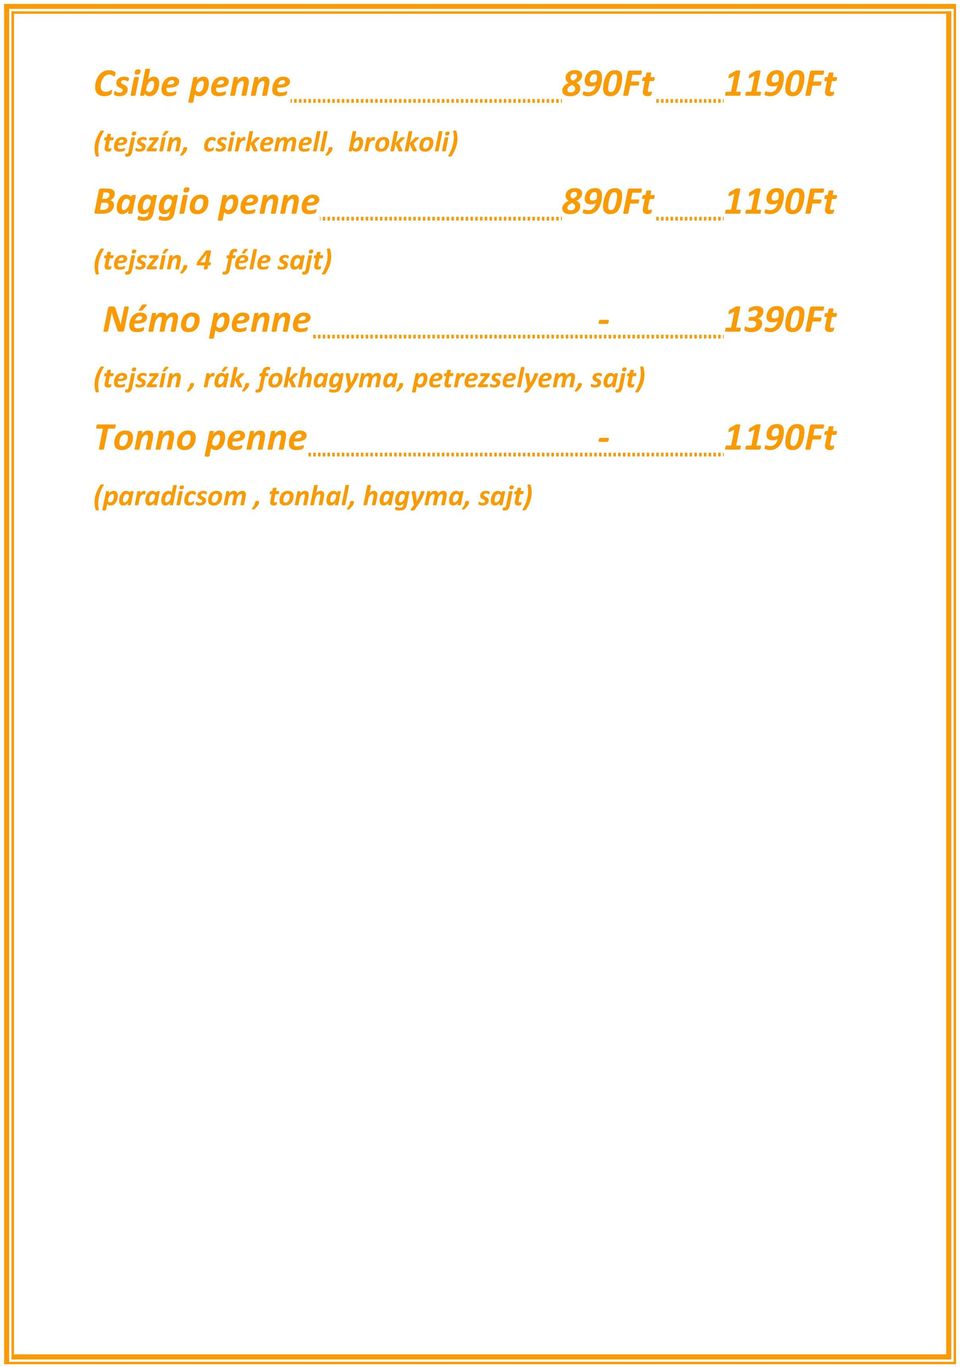 penne - 1390Ft (tejszín, rák, fokhagyma, petrezselyem,